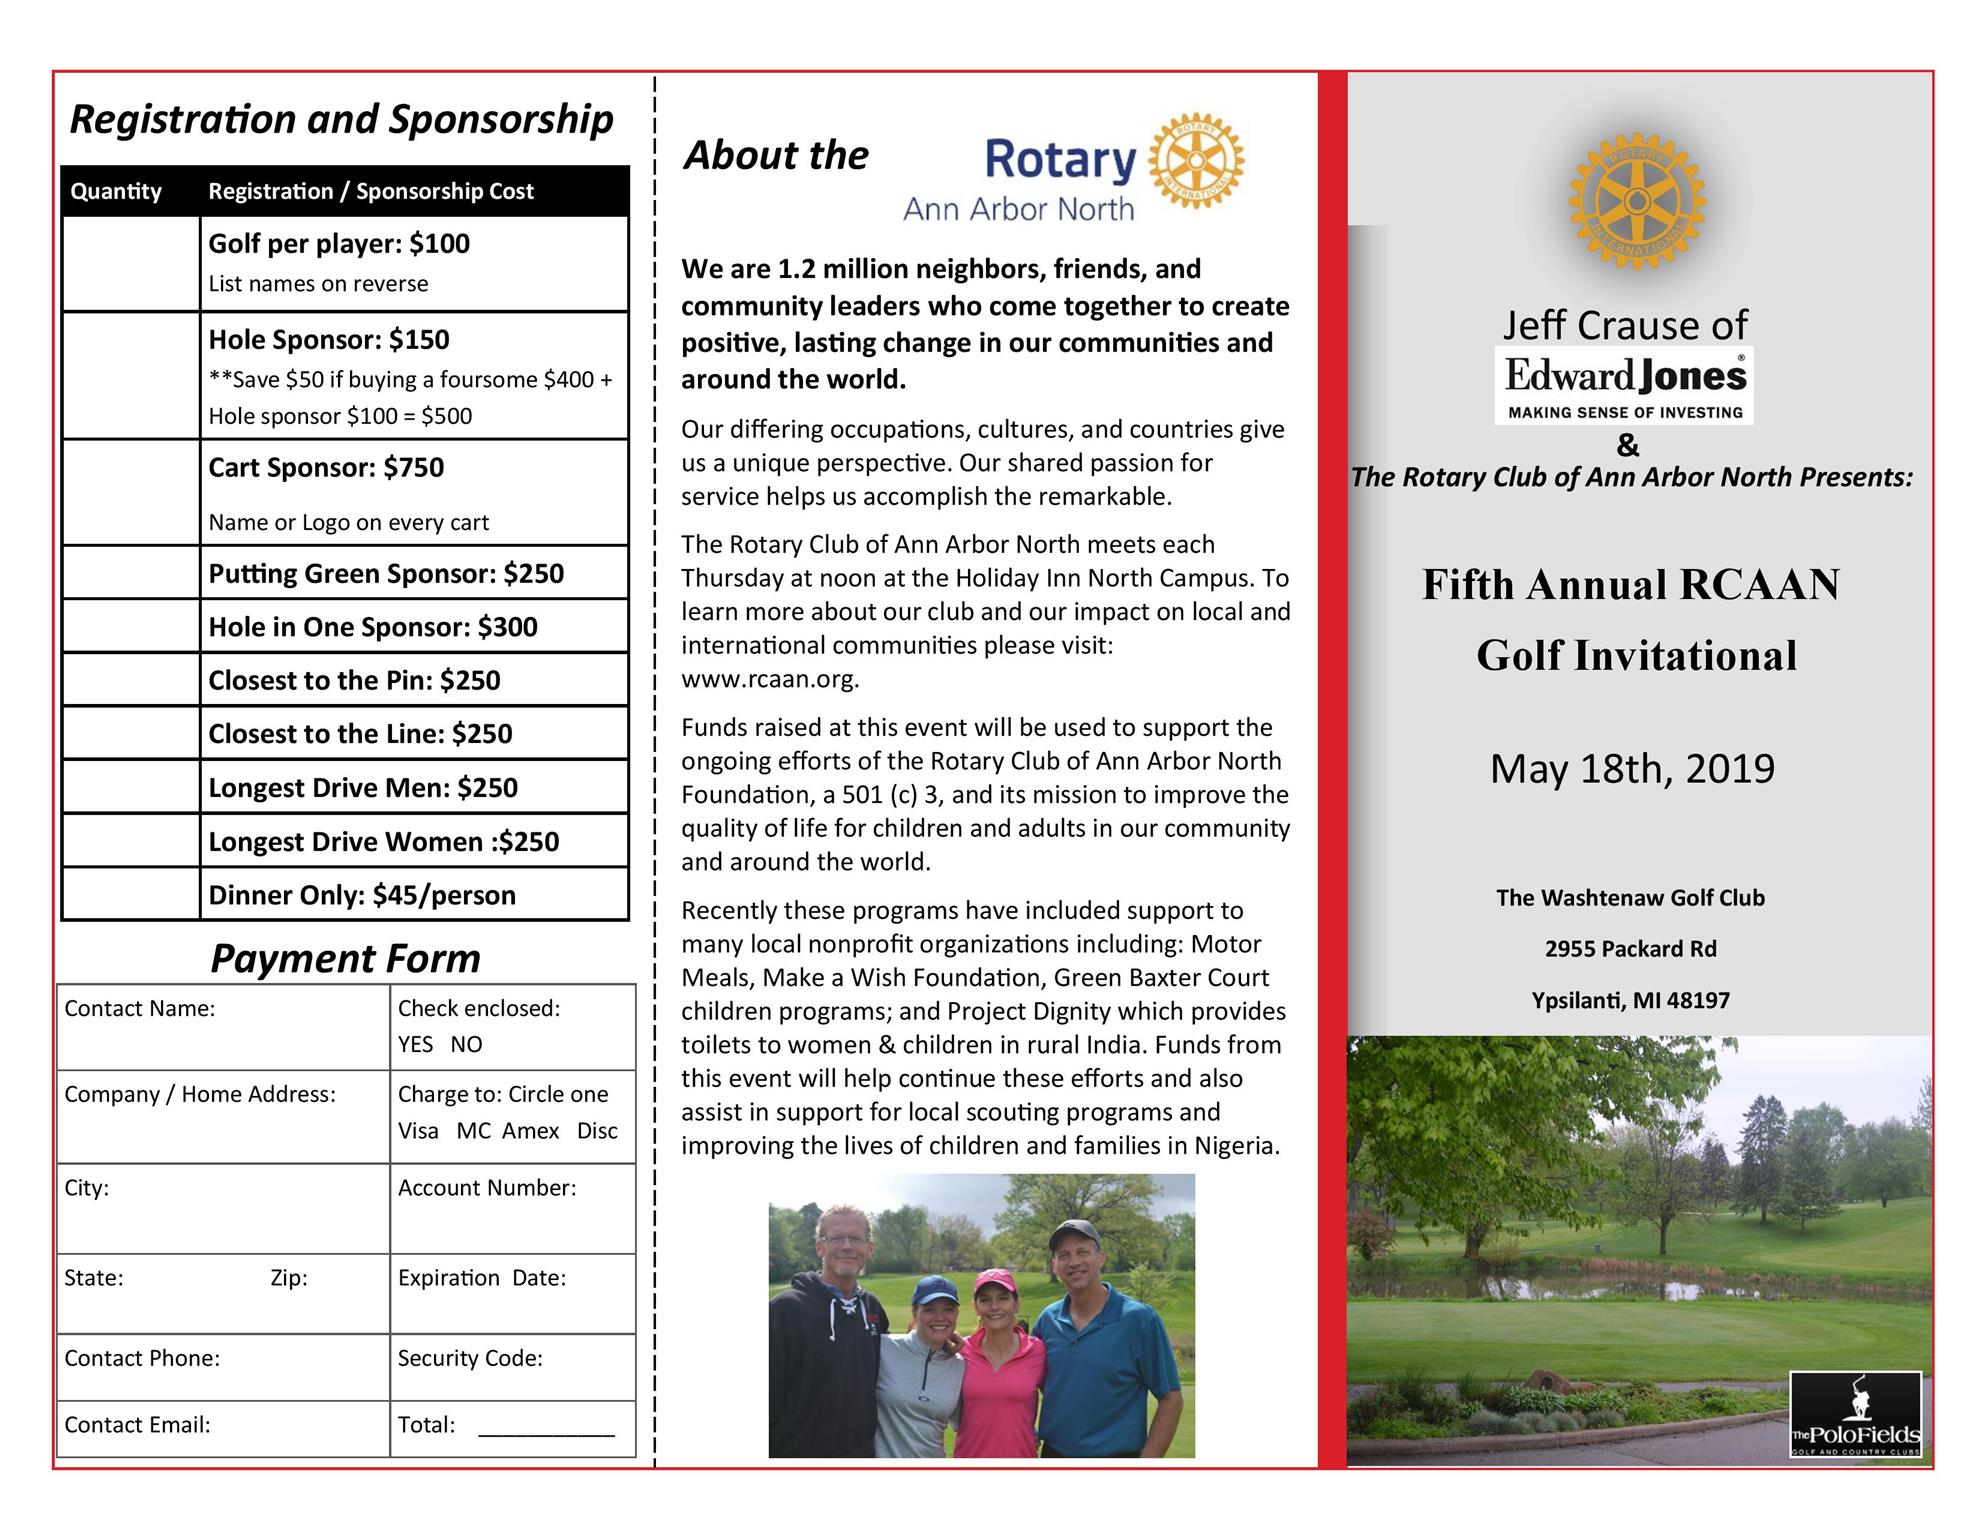 Fifth Annual RCAAN Golf Invitational Brochure (PDF)